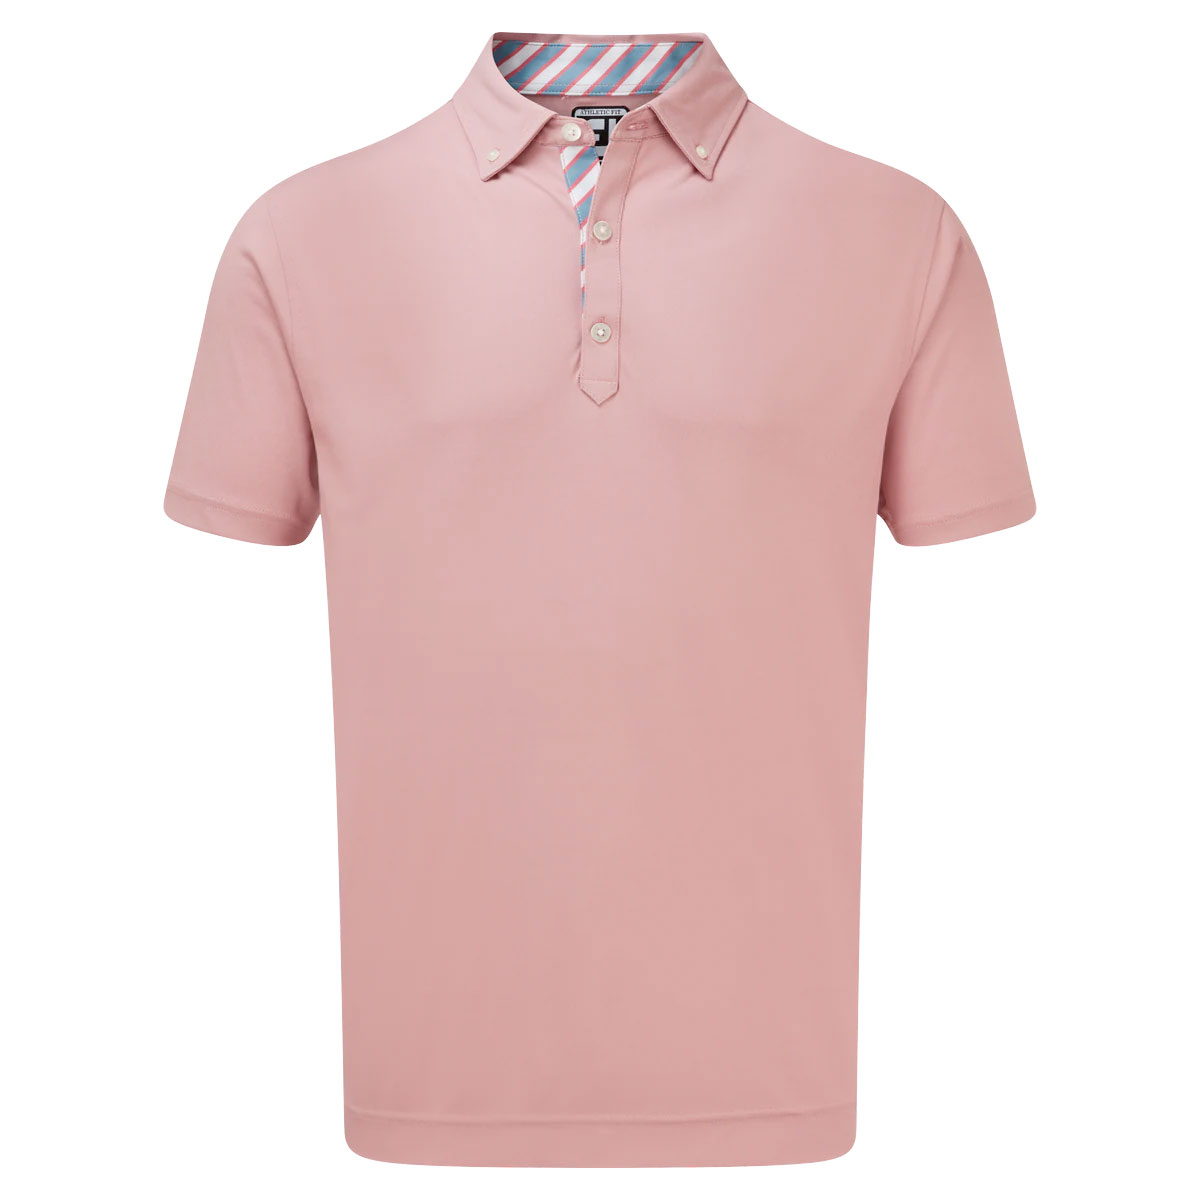 FootJoy Birdseye Jacquard with Stripe Trim Mens Golf Polo Shirt  - Cape Red